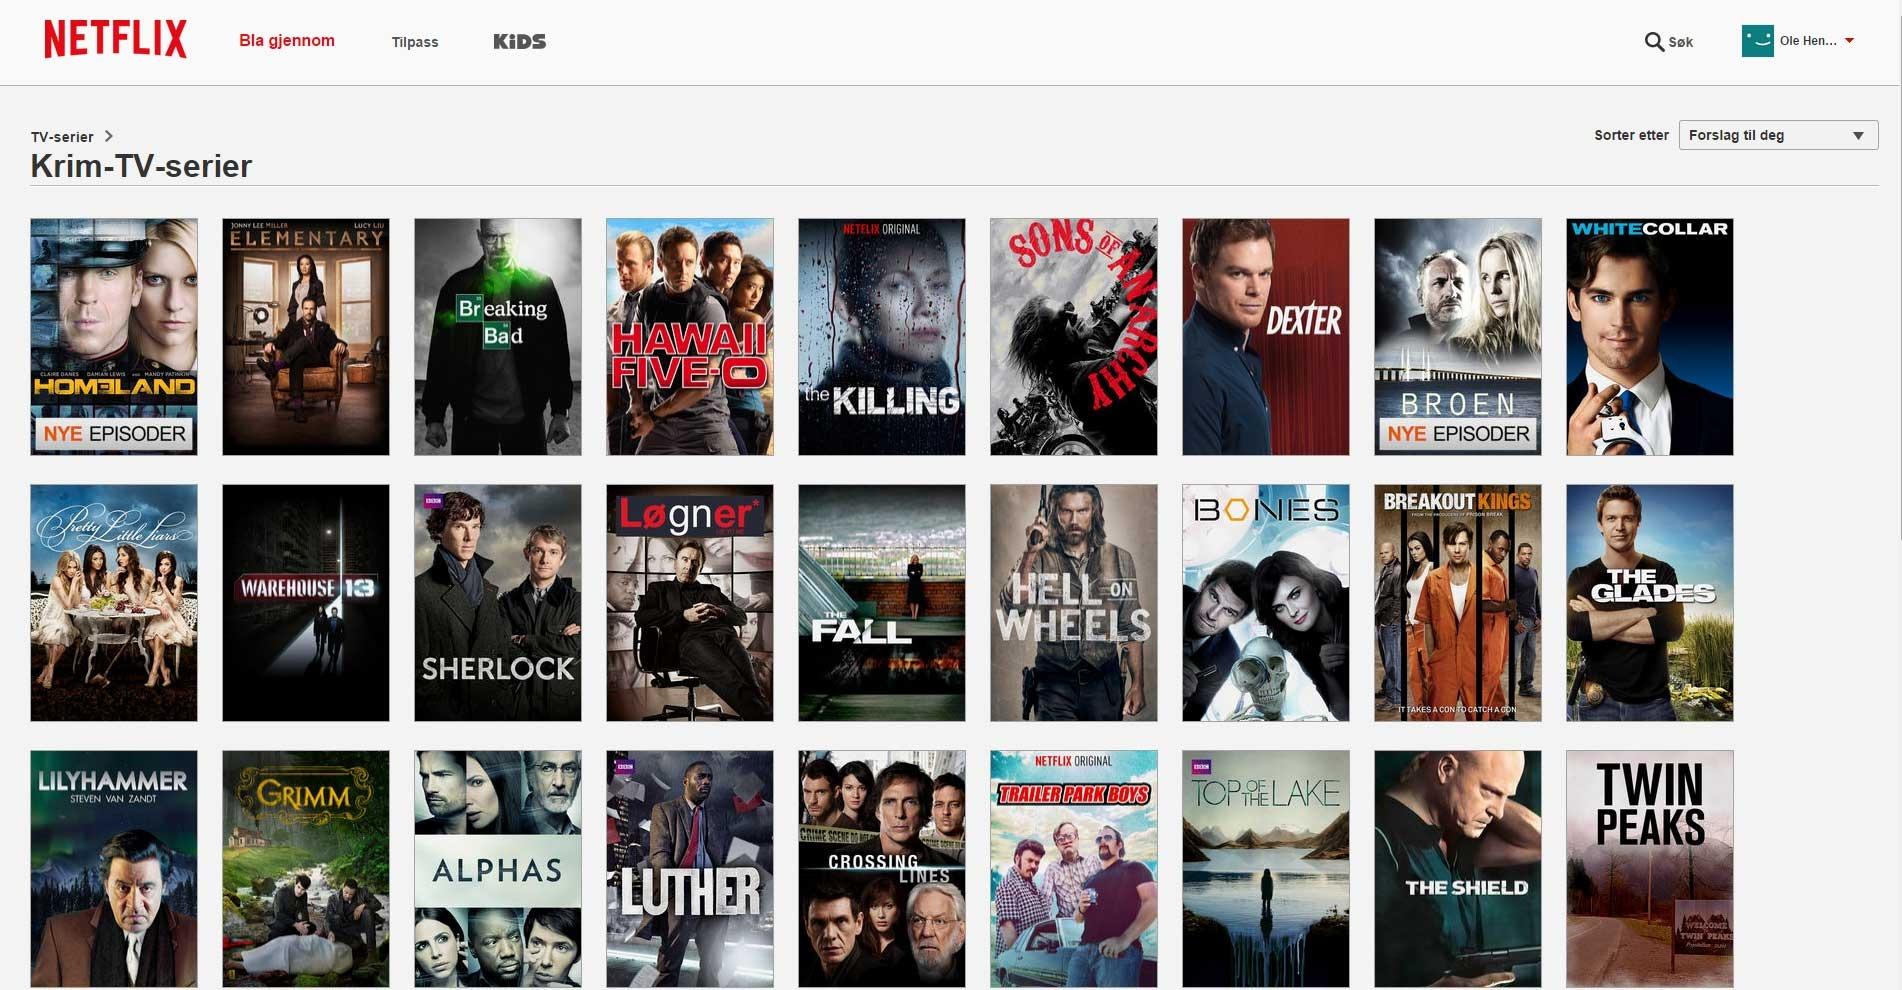 Netflix, skjermdump 7.10.2014.